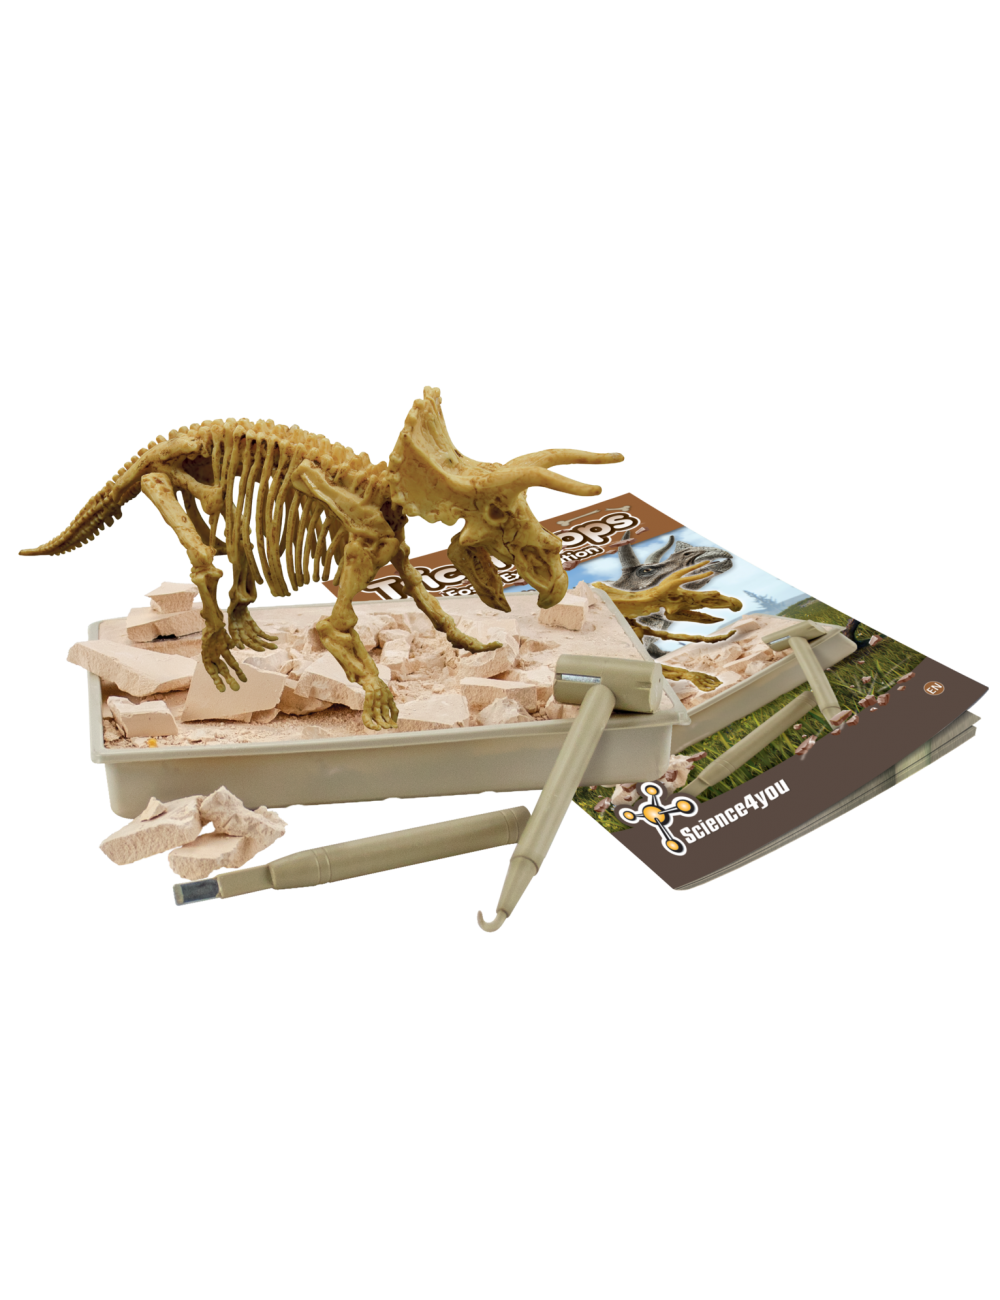 Excavation Fossil - Triceratopo